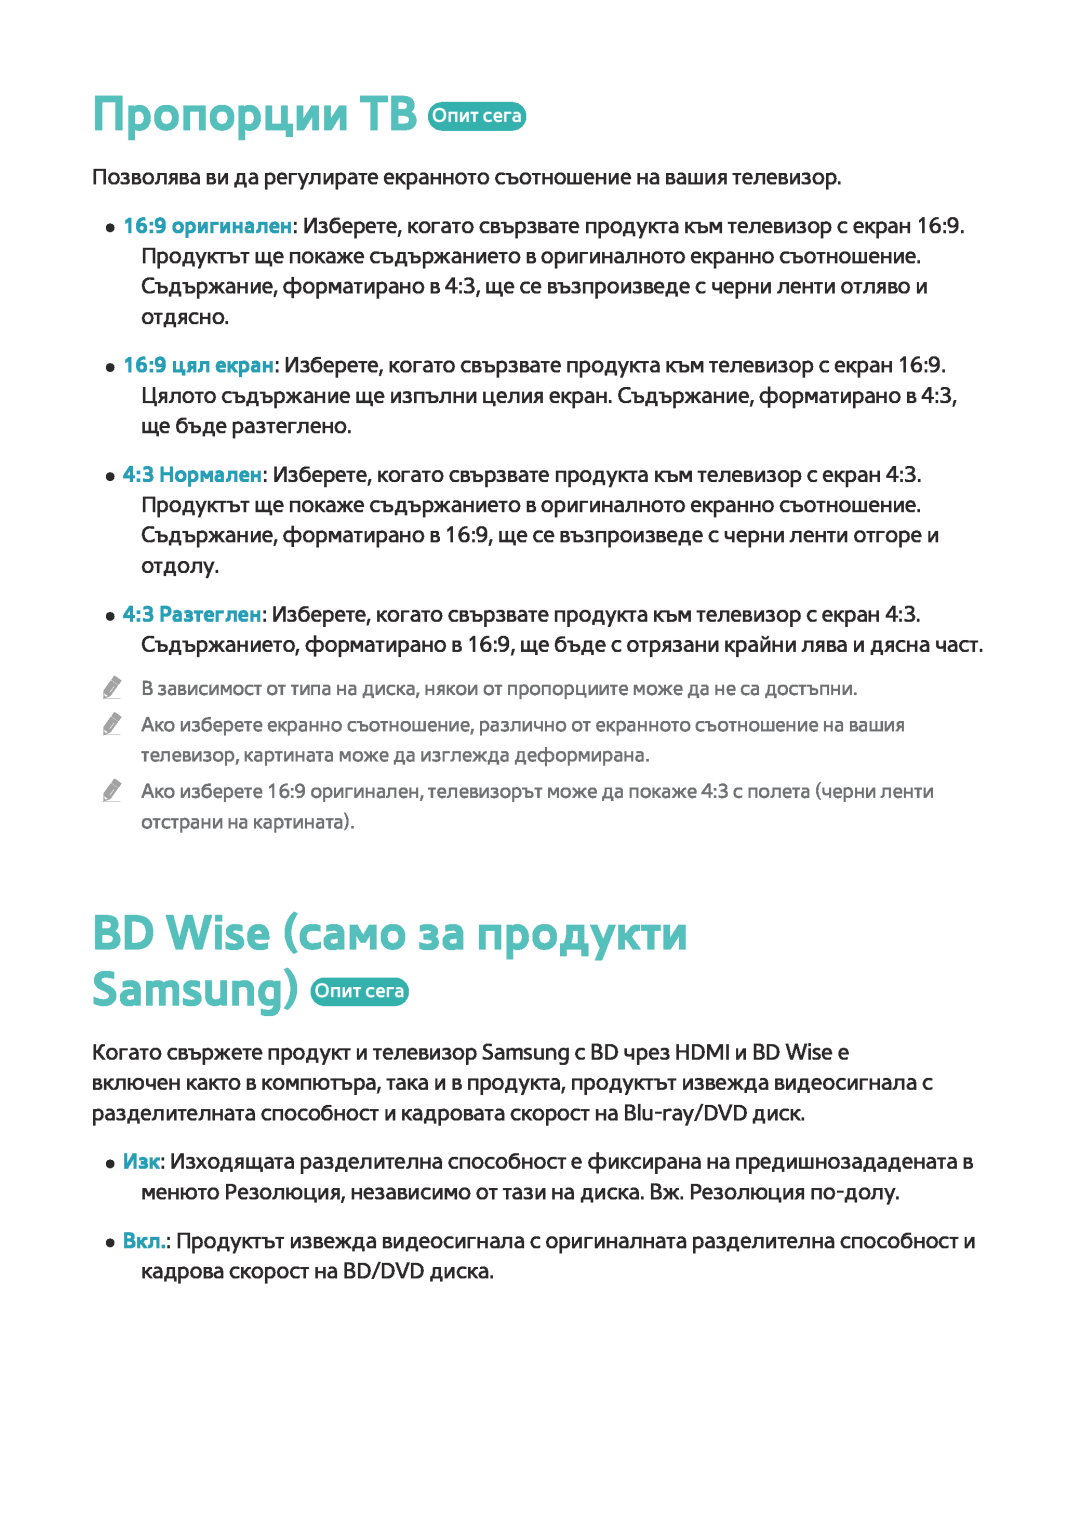 Samsung BD-F6900/EN, BD-F8500/EN manual Пропорции ТВ Опит сега, BD Wise само за продукти Samsung Опит сега 